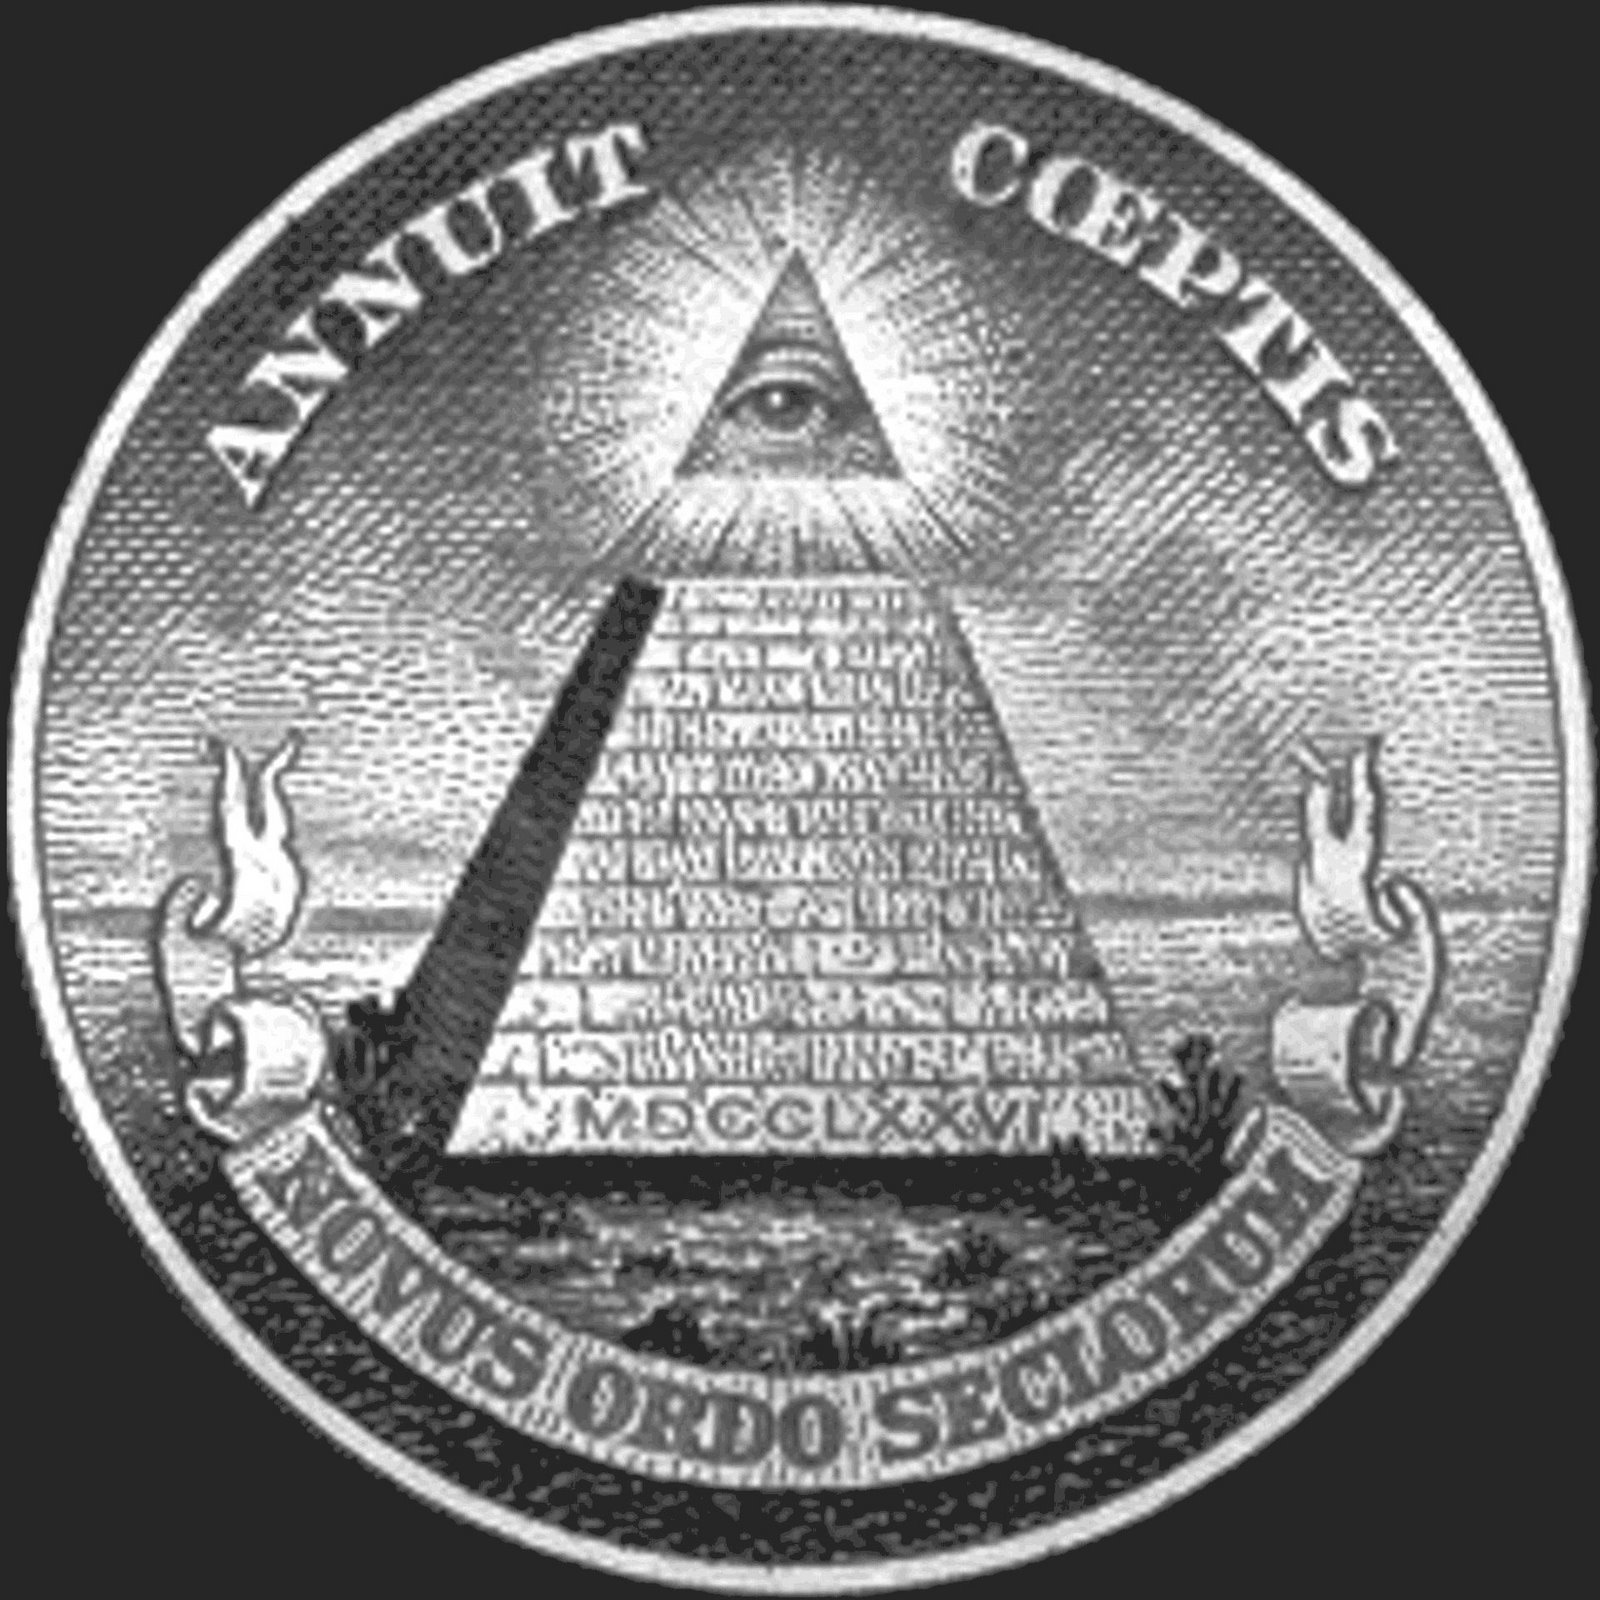 [federal+reserve+masons+all+seeing+eye+pyramid.jpg]